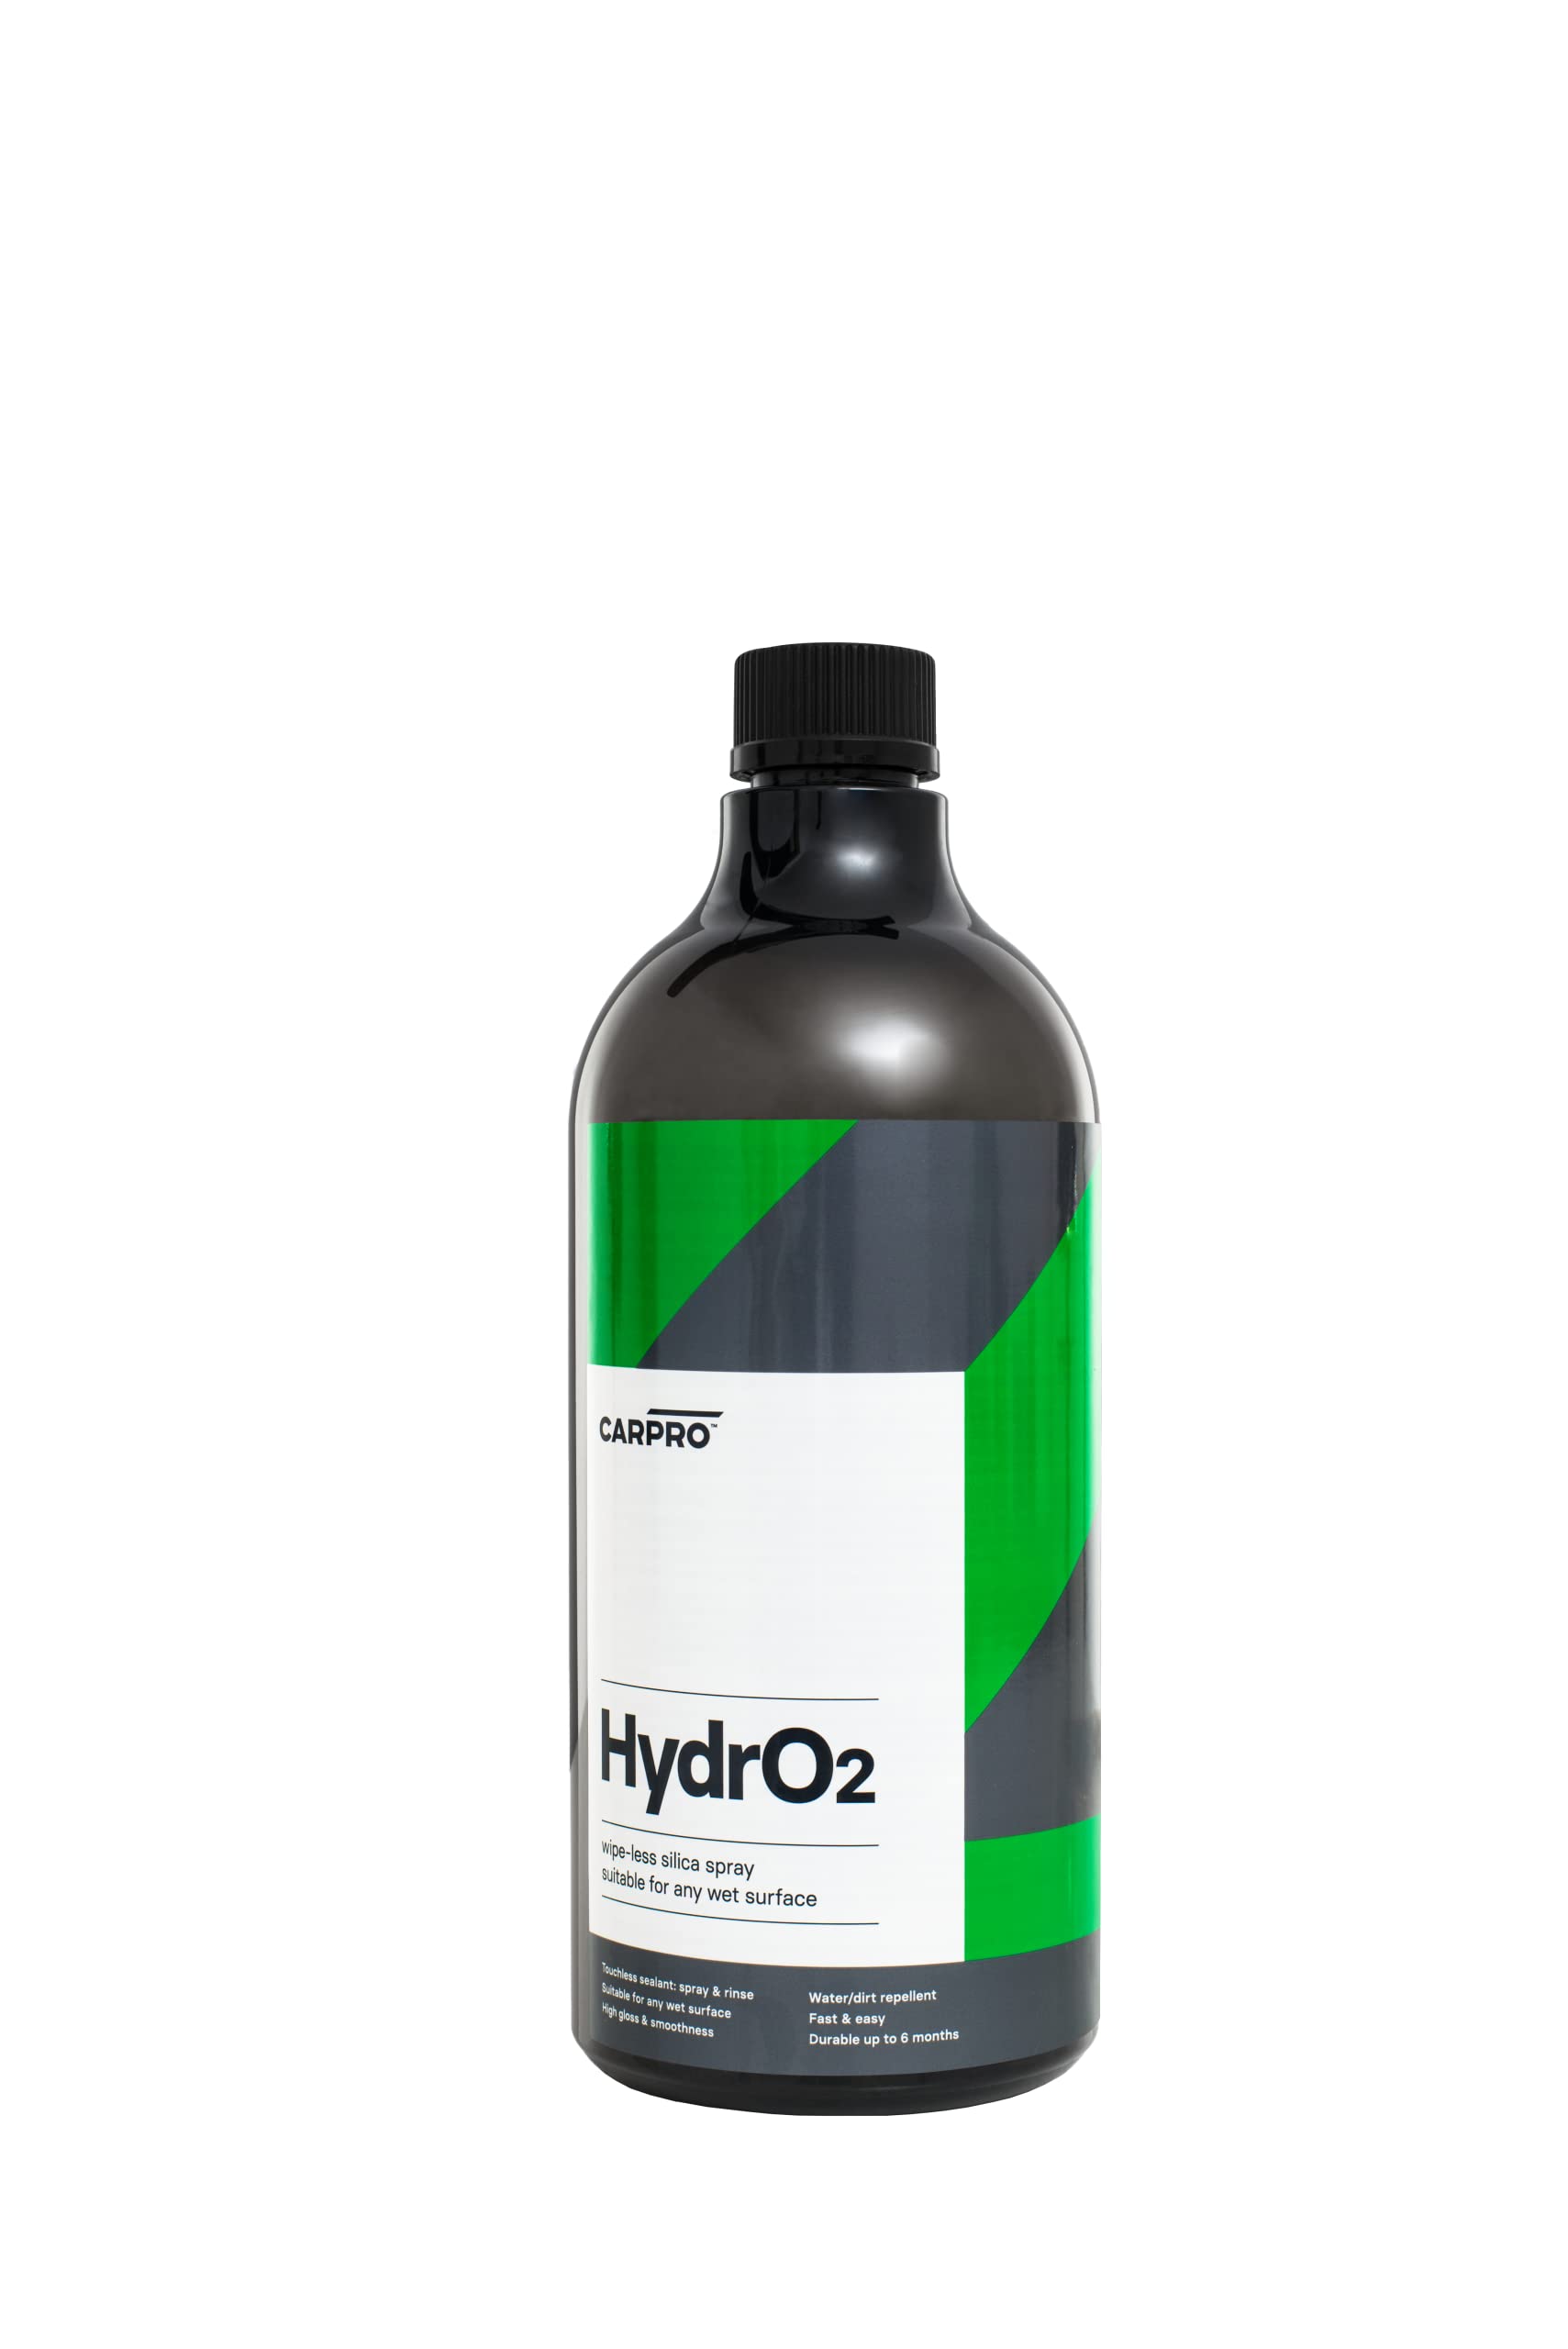 Carpro HydrO2 von CarPro